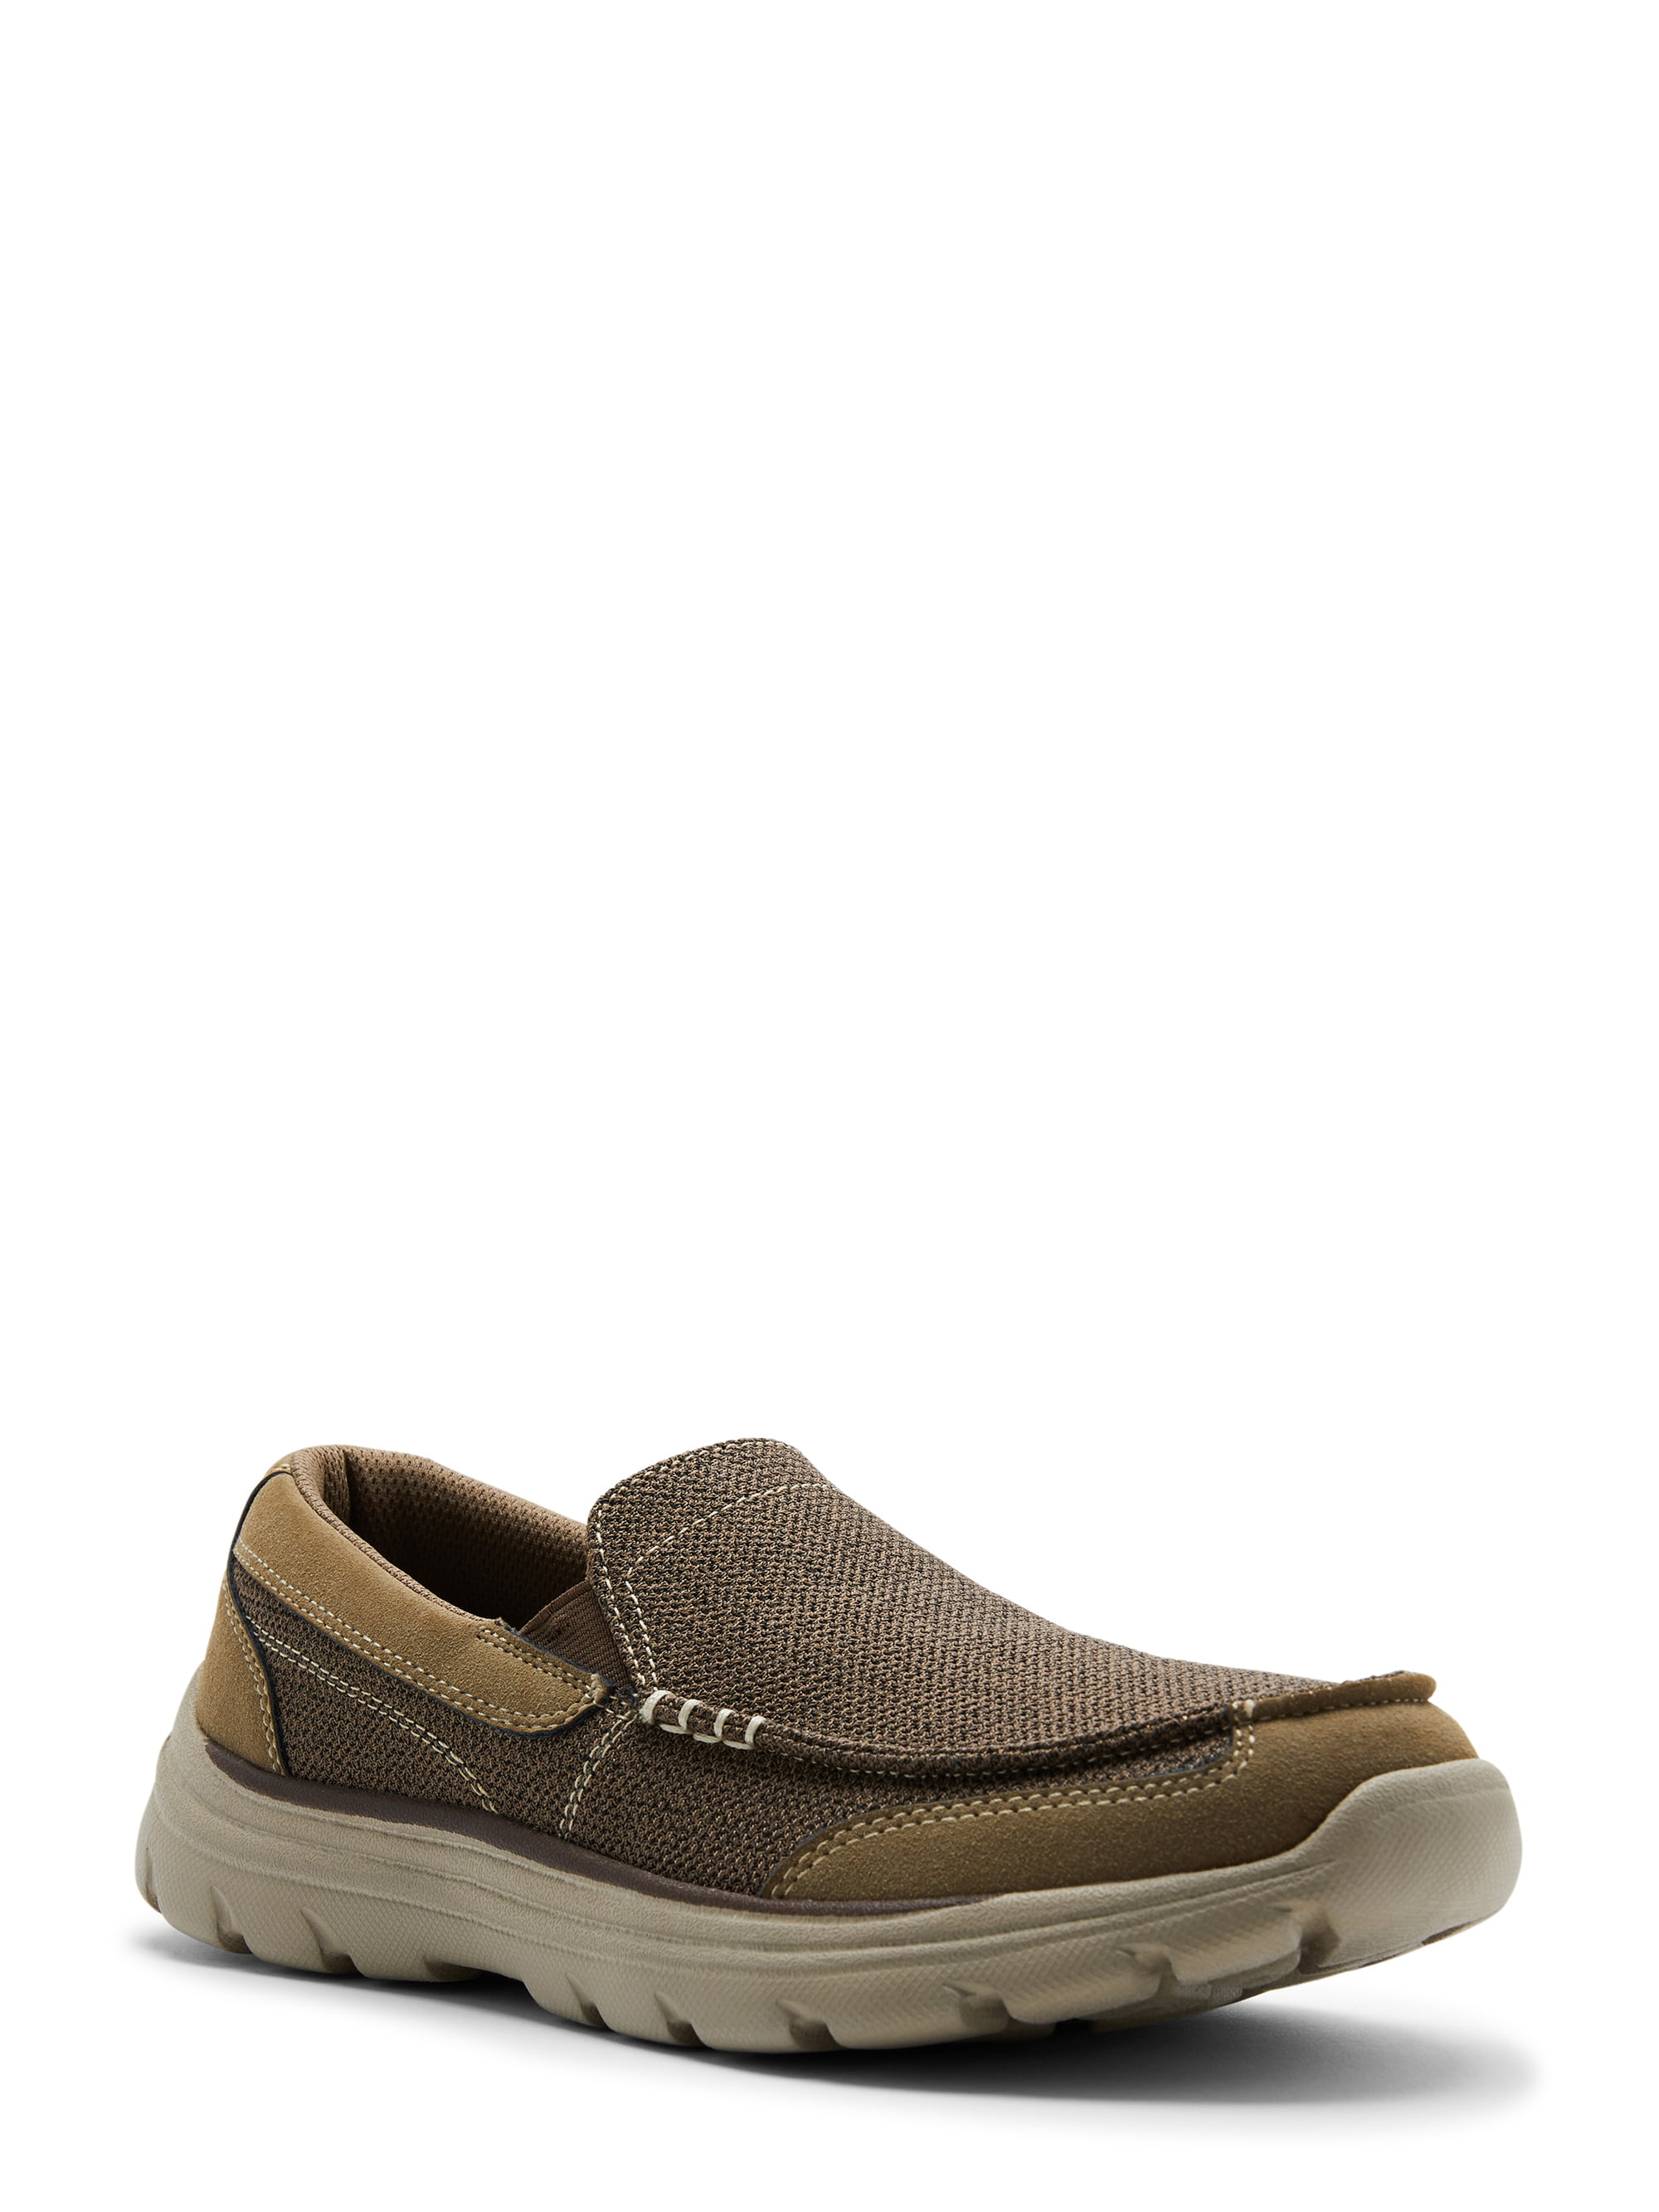 George Men's Mentor Slip On Comfort Sneaker Brown SIZE US 12 --A109 ...